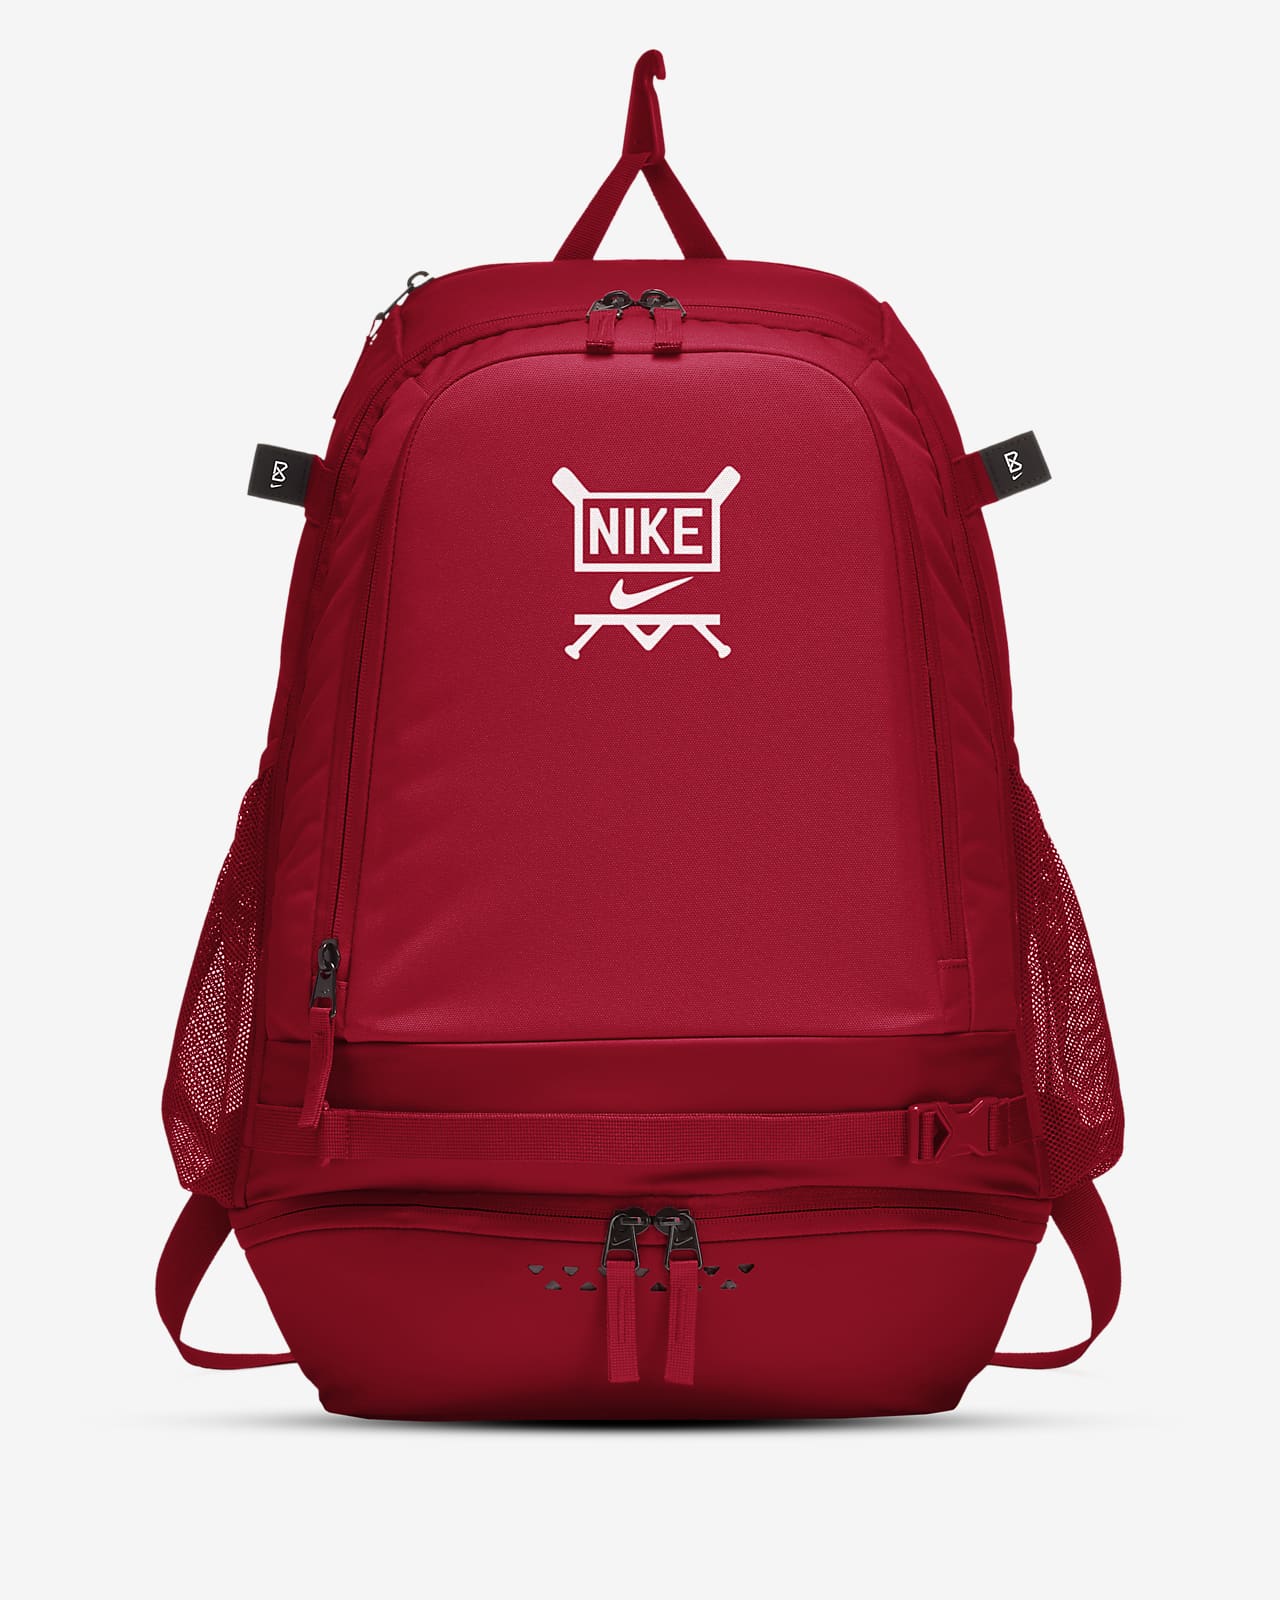 DeMarini Spectre Baseball and Softball Backpack: WB57176 – HB Sports Inc.